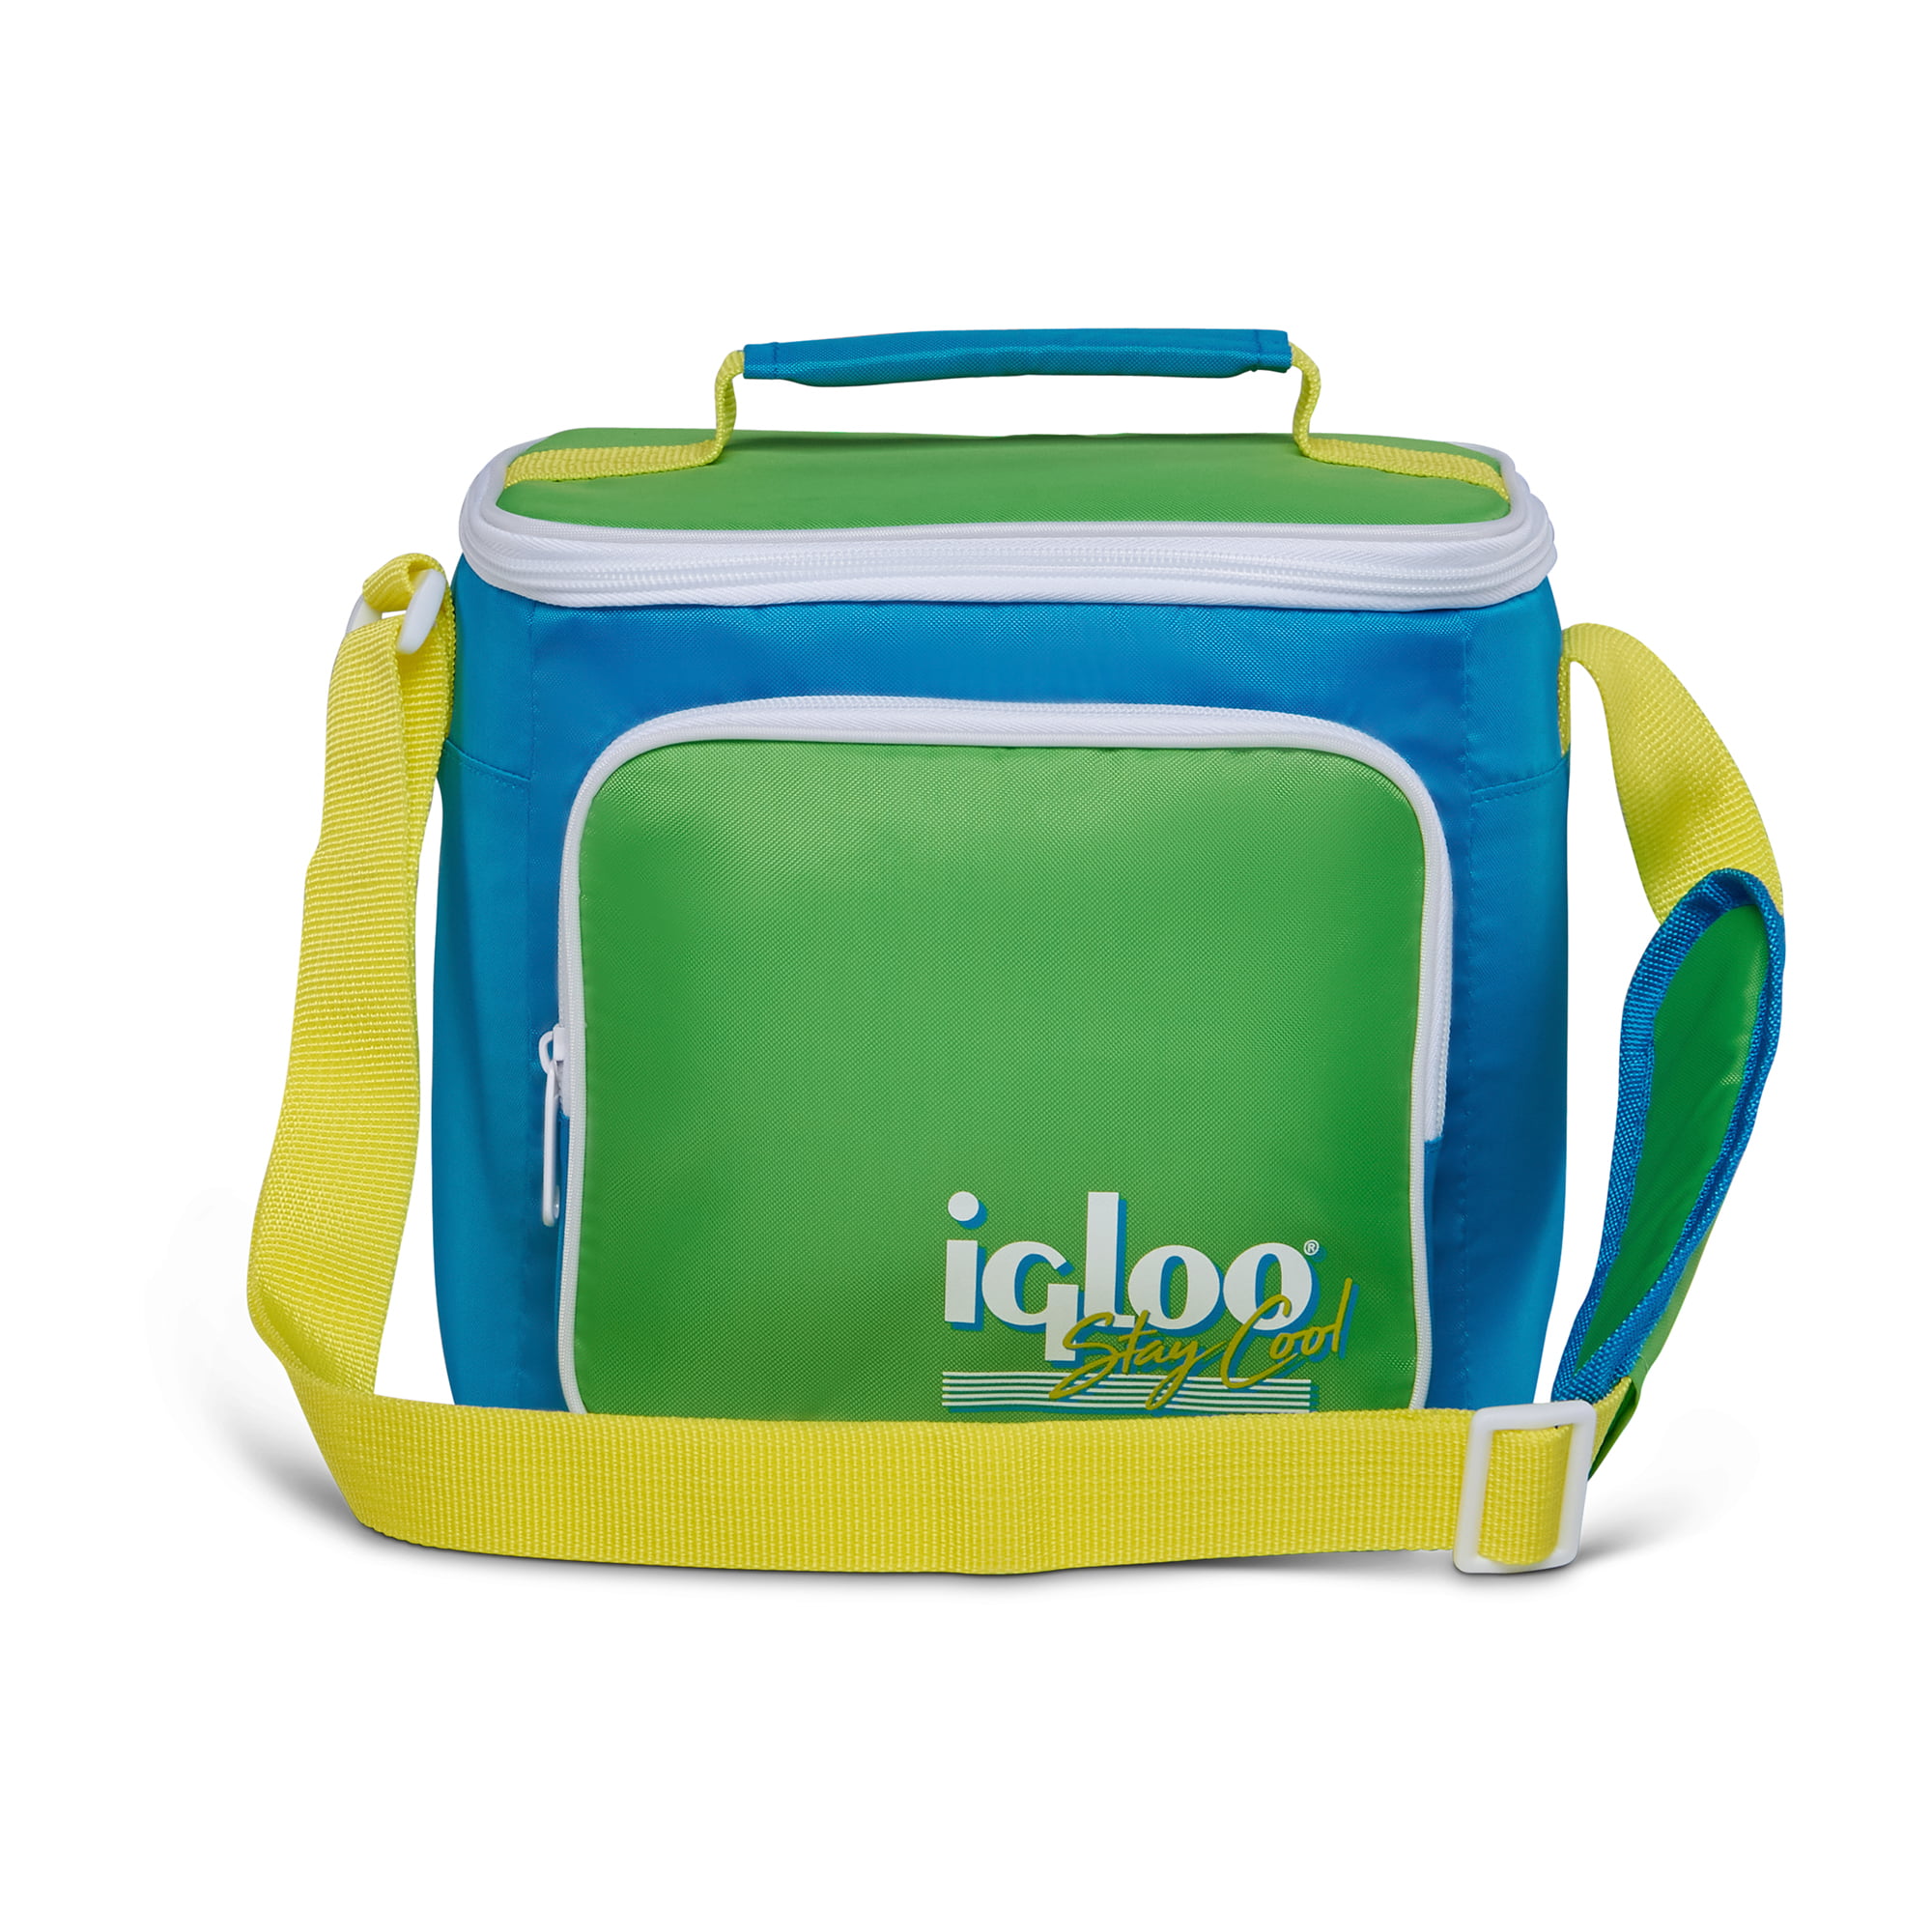 Igloo Retro Square Lunch Bag, Yellow